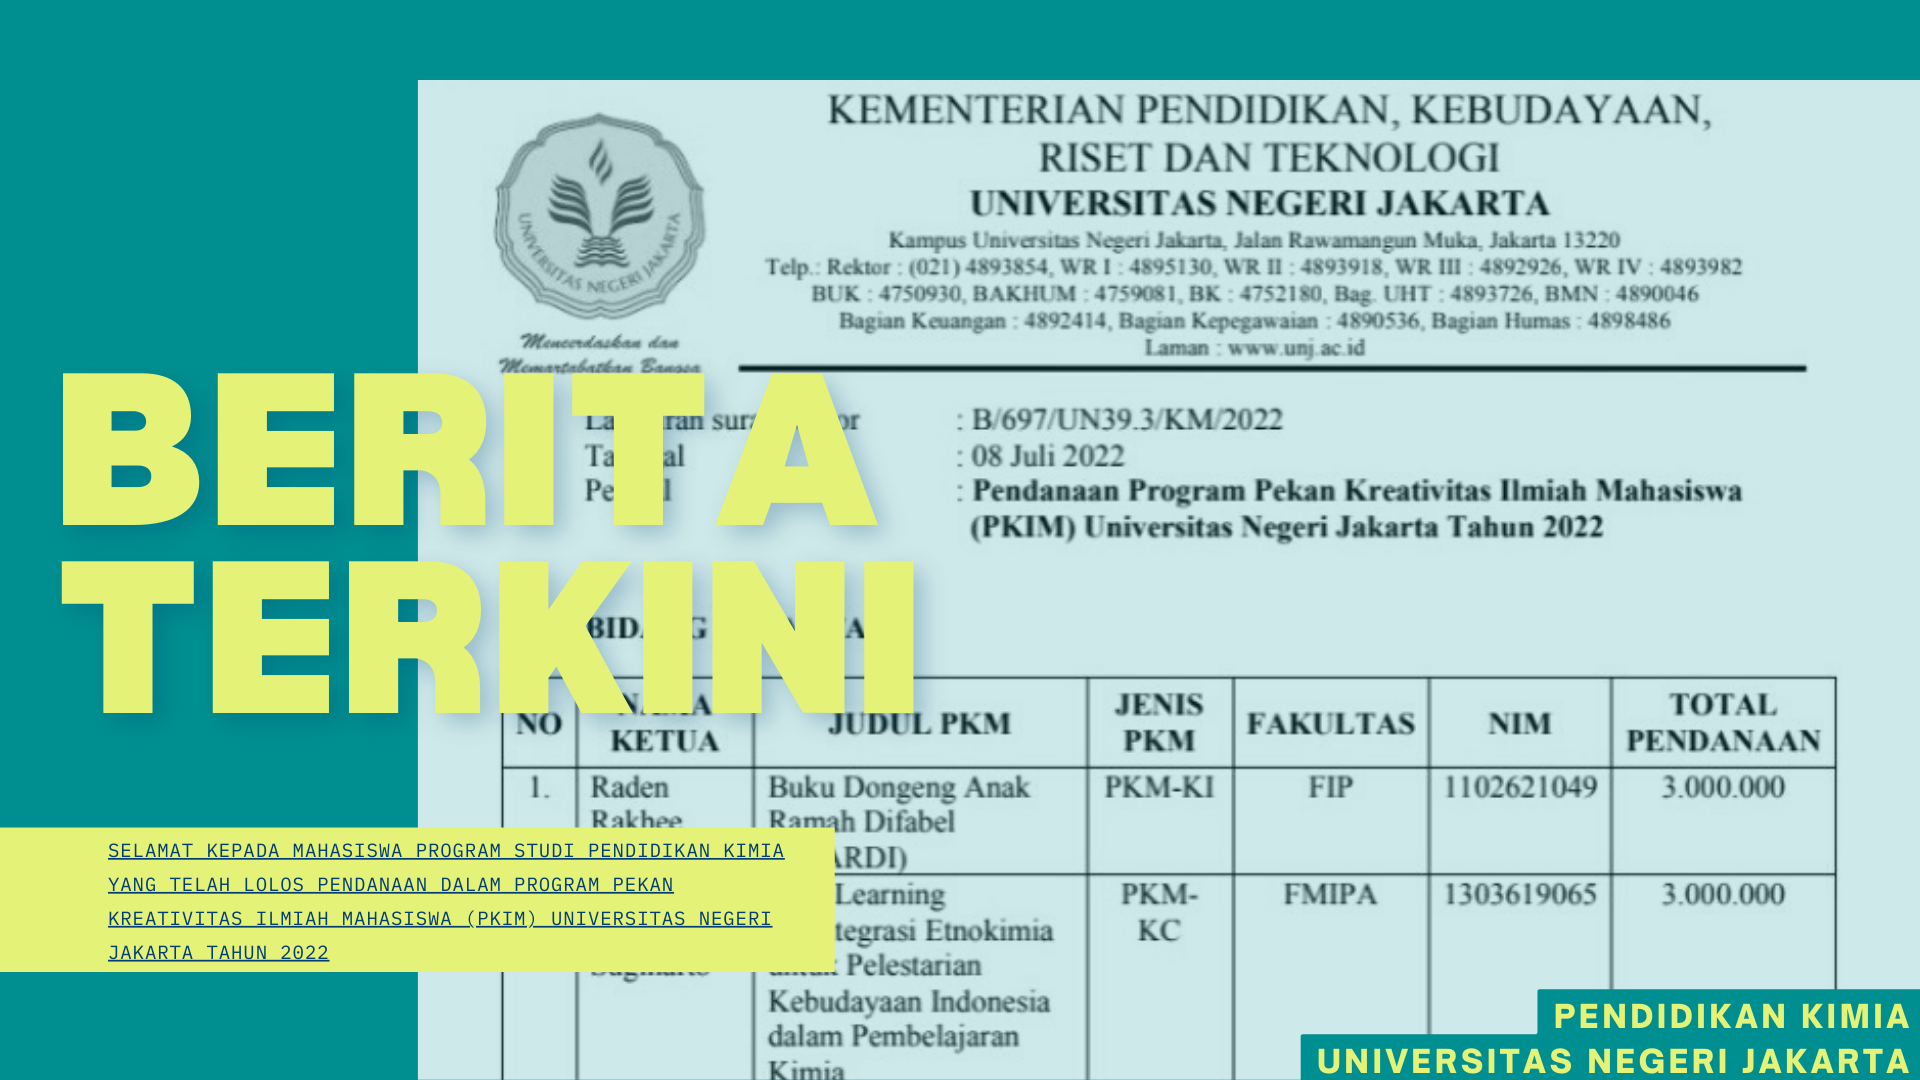 Selamat kepada Mahasiswa Program Studi Pendidikan Kimia yang telah lolos pendanaan dalam Program Pekan Kreativitas Ilmiah Mahasiswa (PKIM) Universitas Negeri Jakarta Tahun 2022